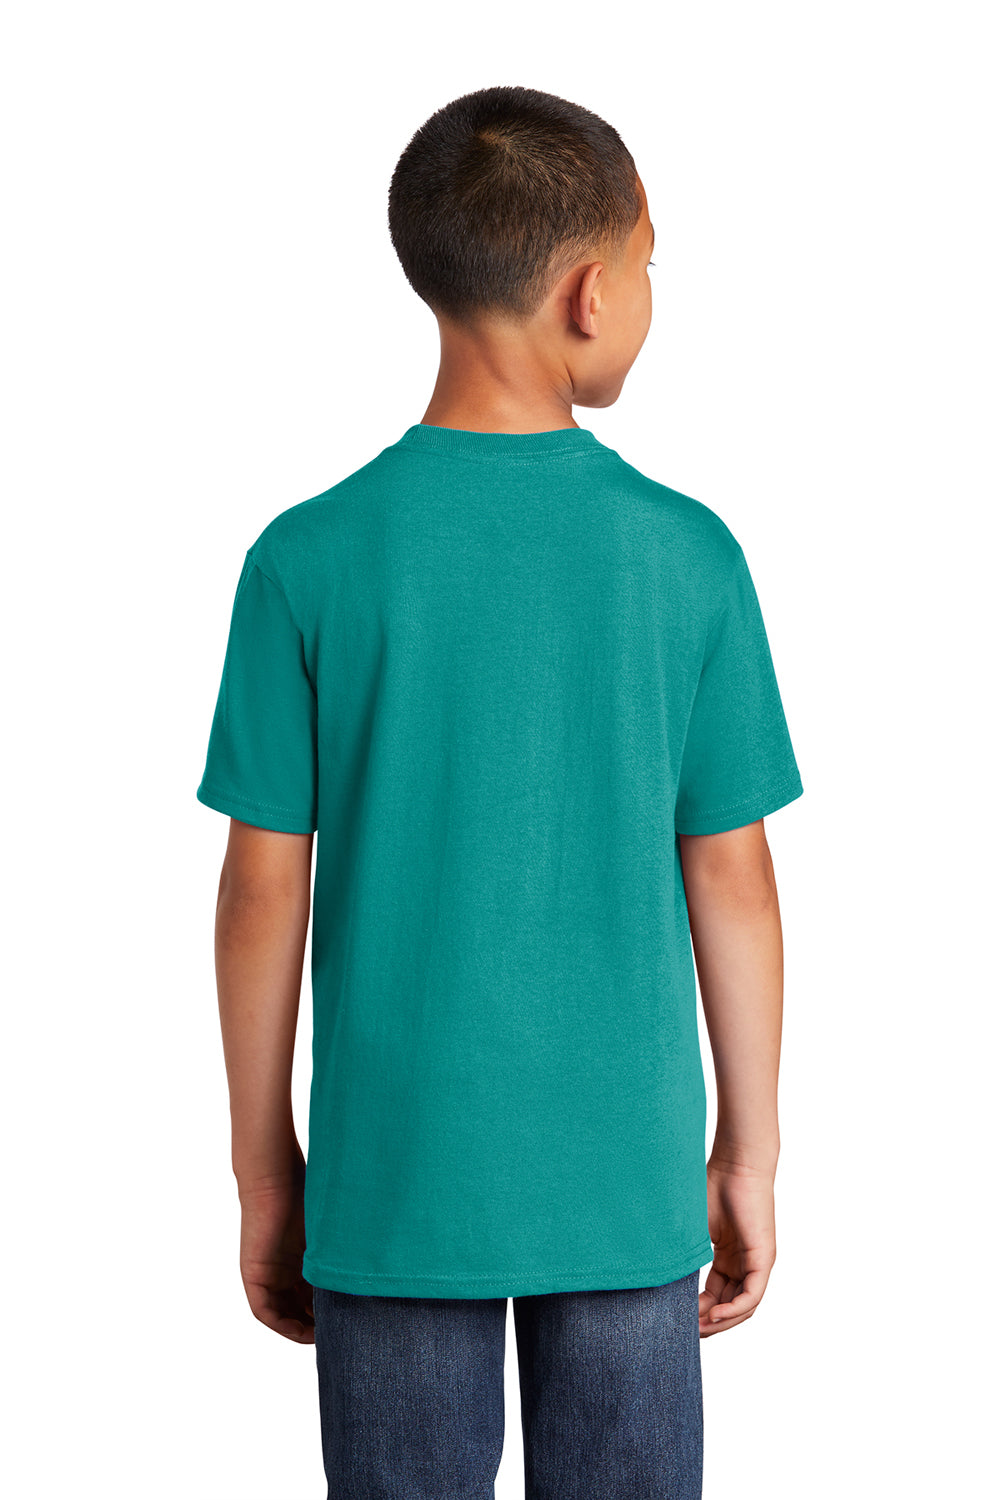 Port & Company PC54Y Youth Core Short Sleeve Crewneck T-Shirt Bright Aqua Blue Back